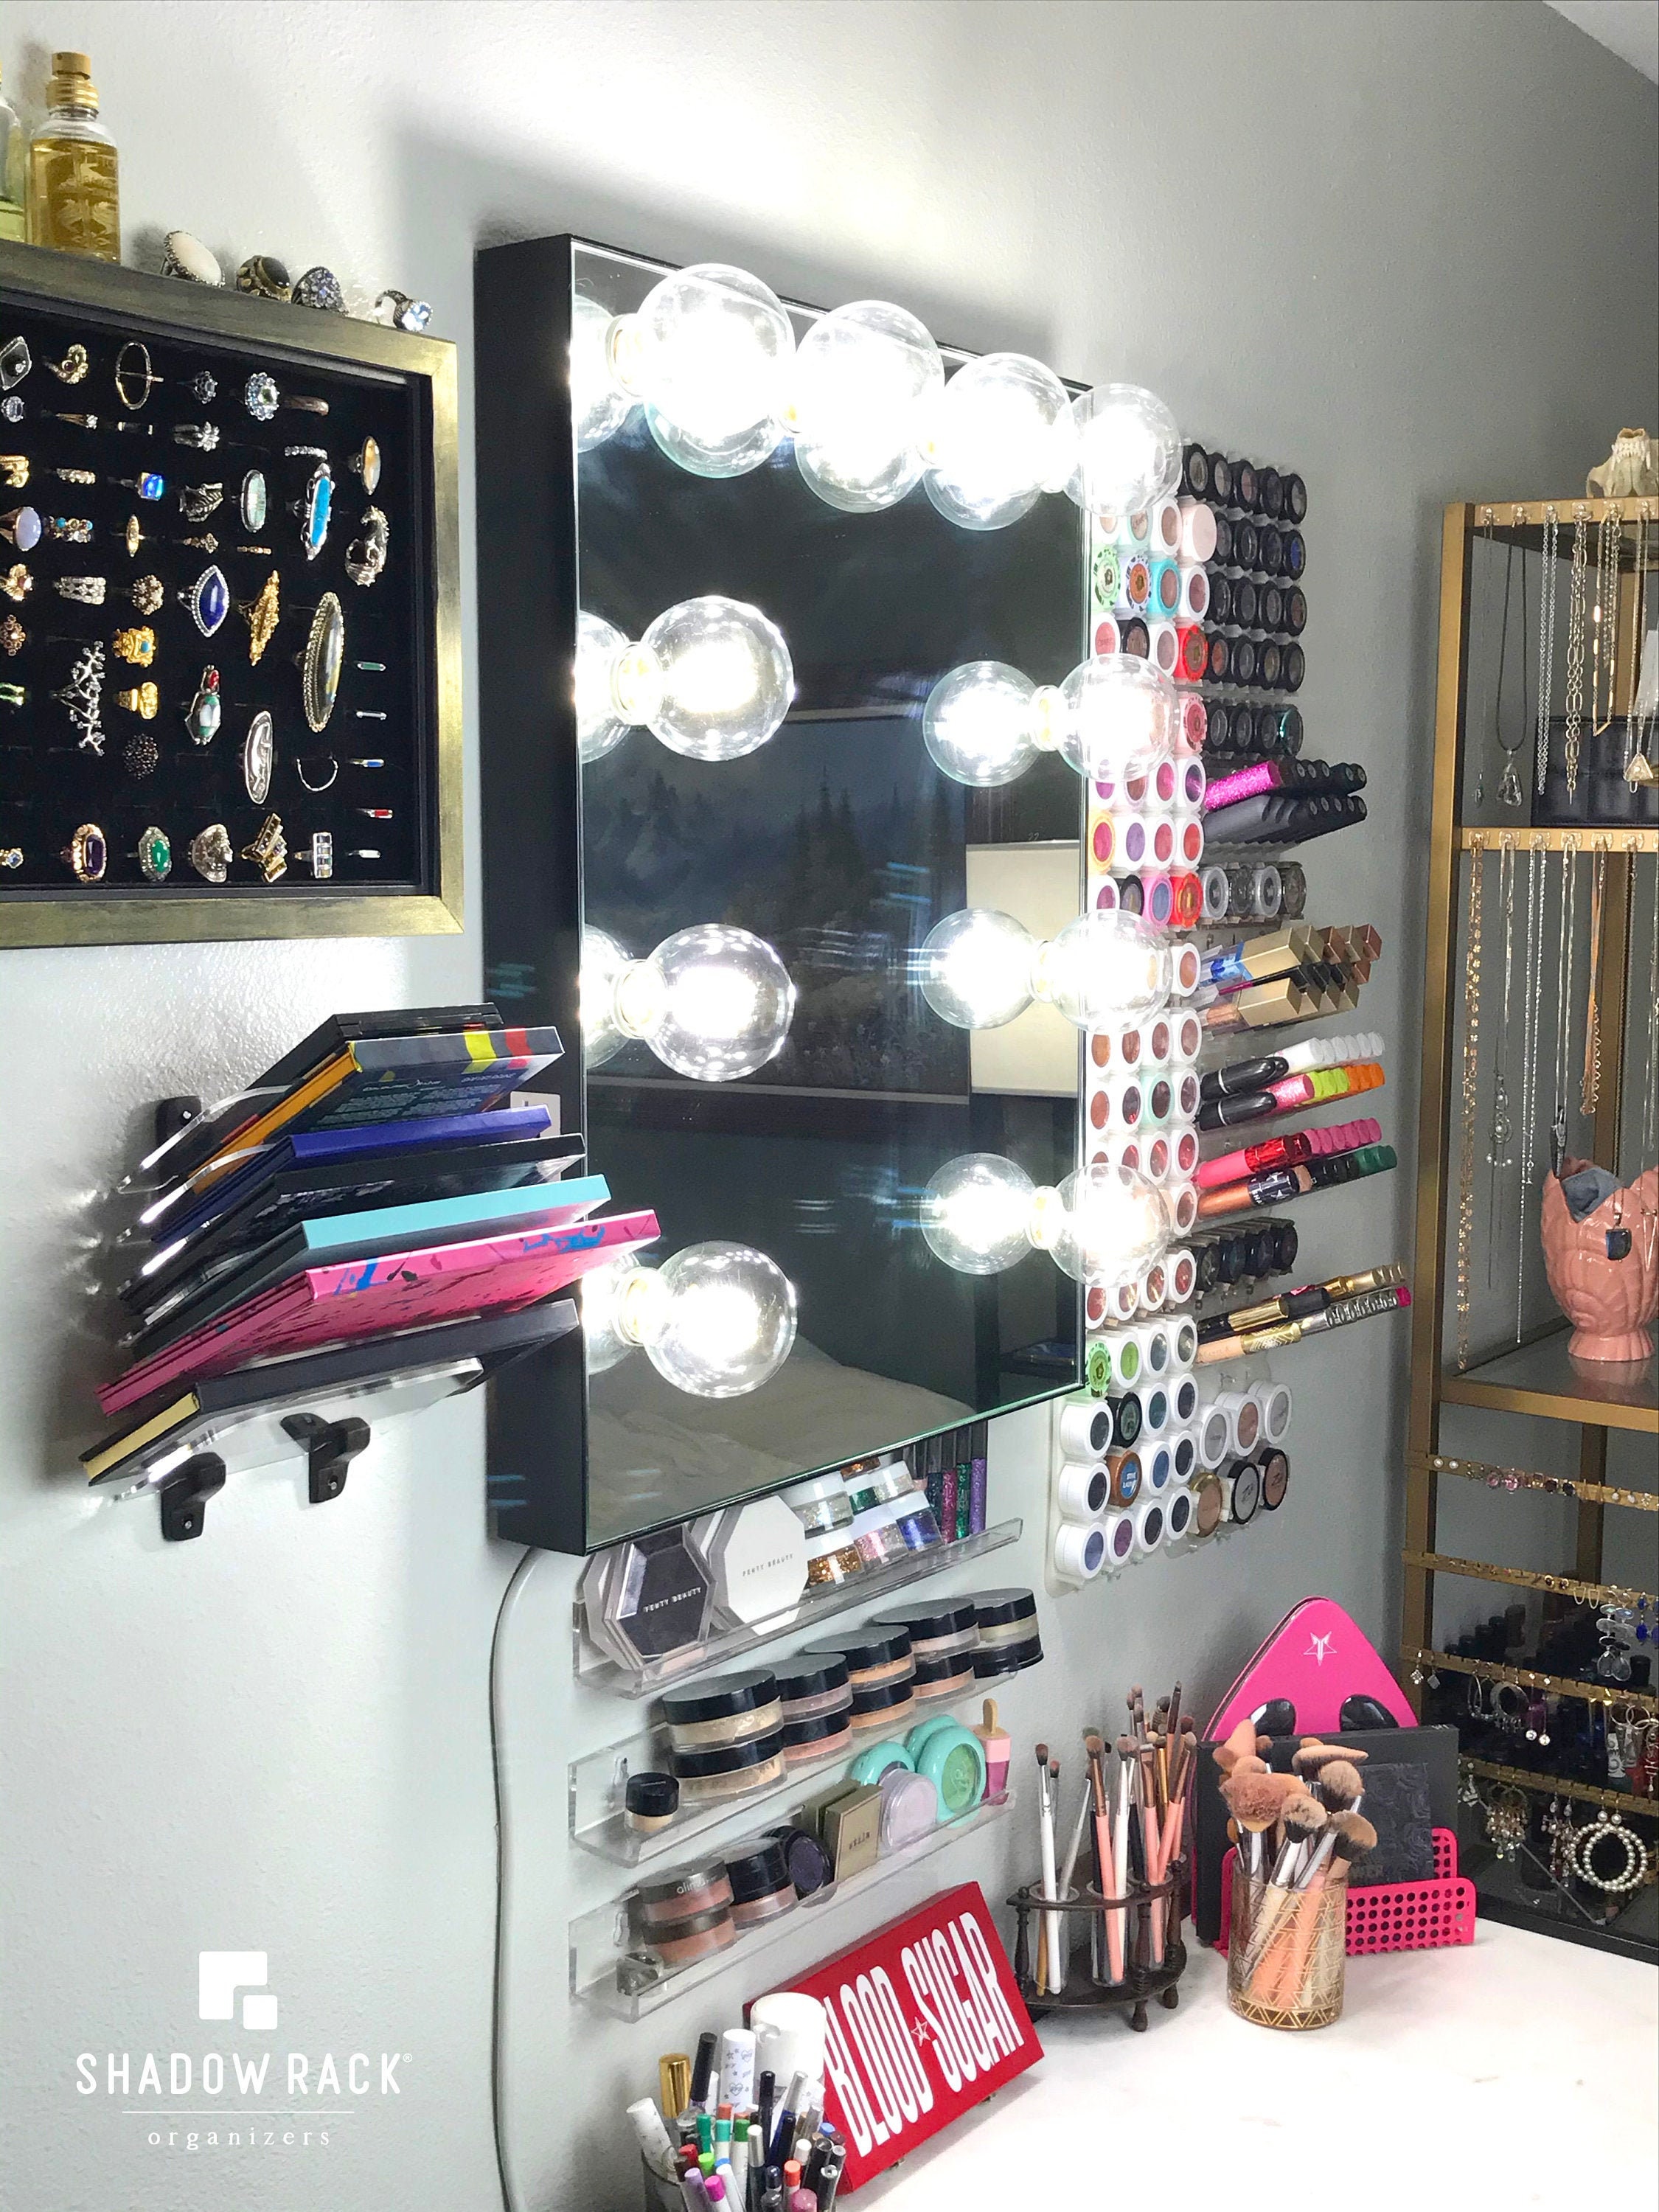 Eyeshadow Storage Case Empty Holder Foundation Container Tools Makeup  Supplies DIY Depotting Palette - AliExpress